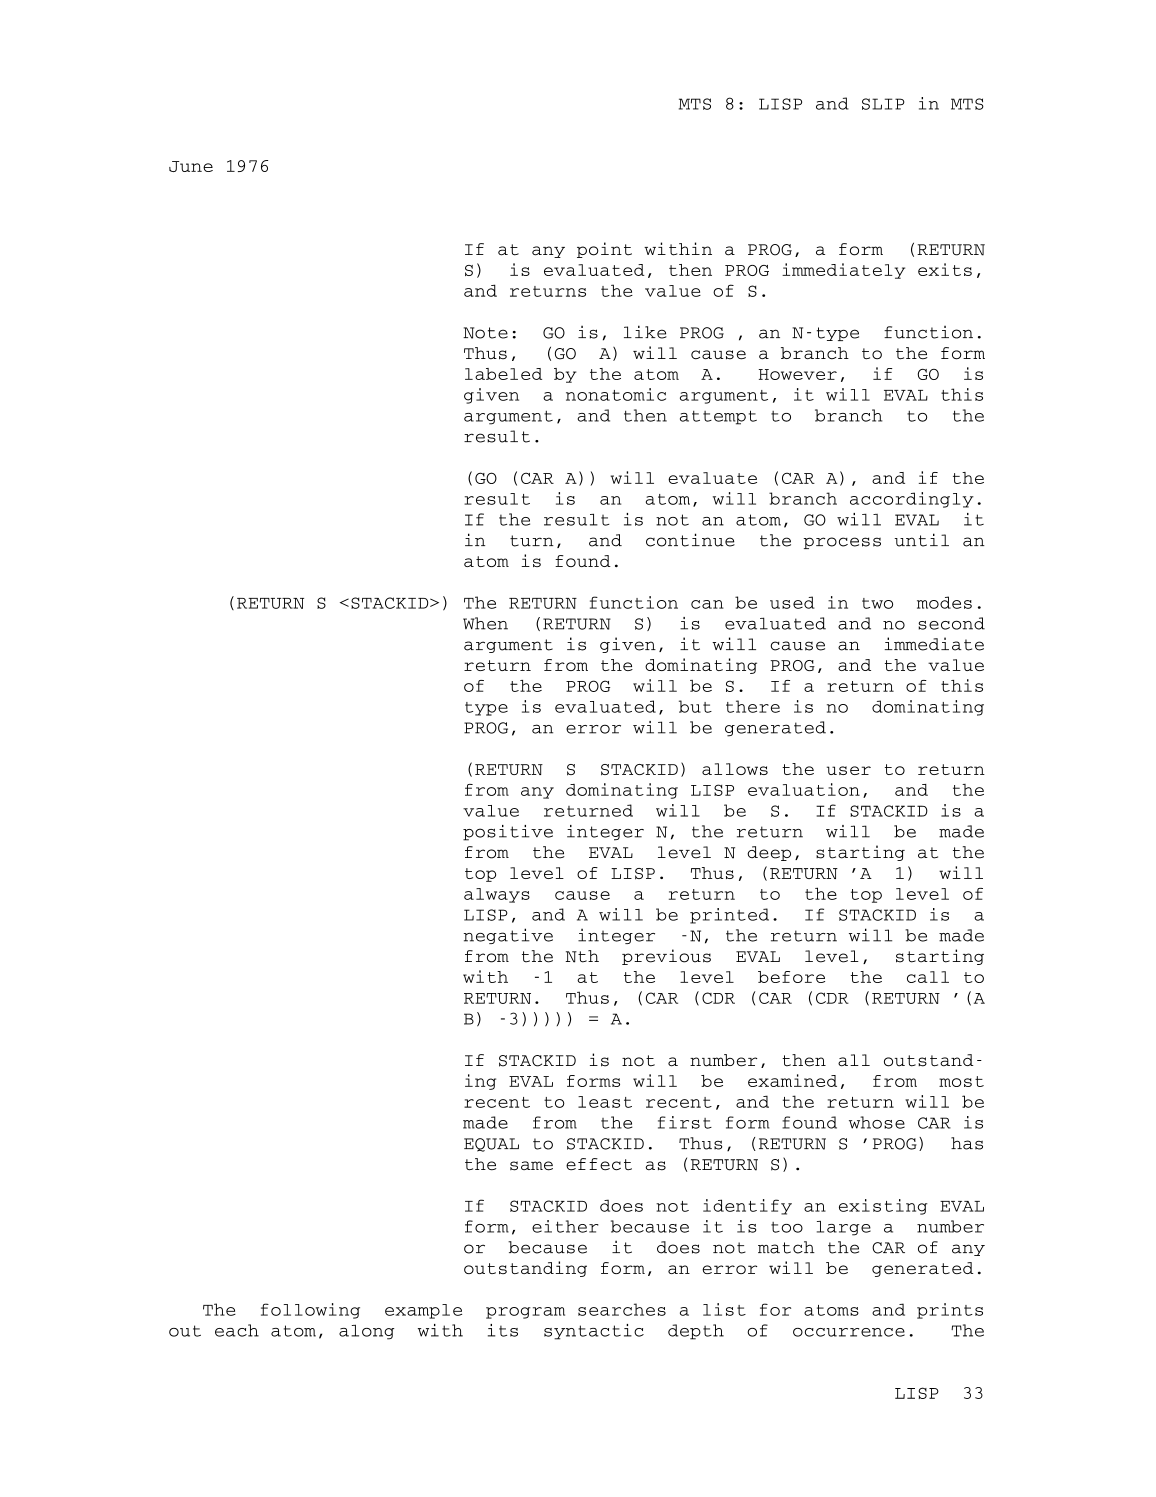 MTS Volume 8 - LISP and SLIP page 32